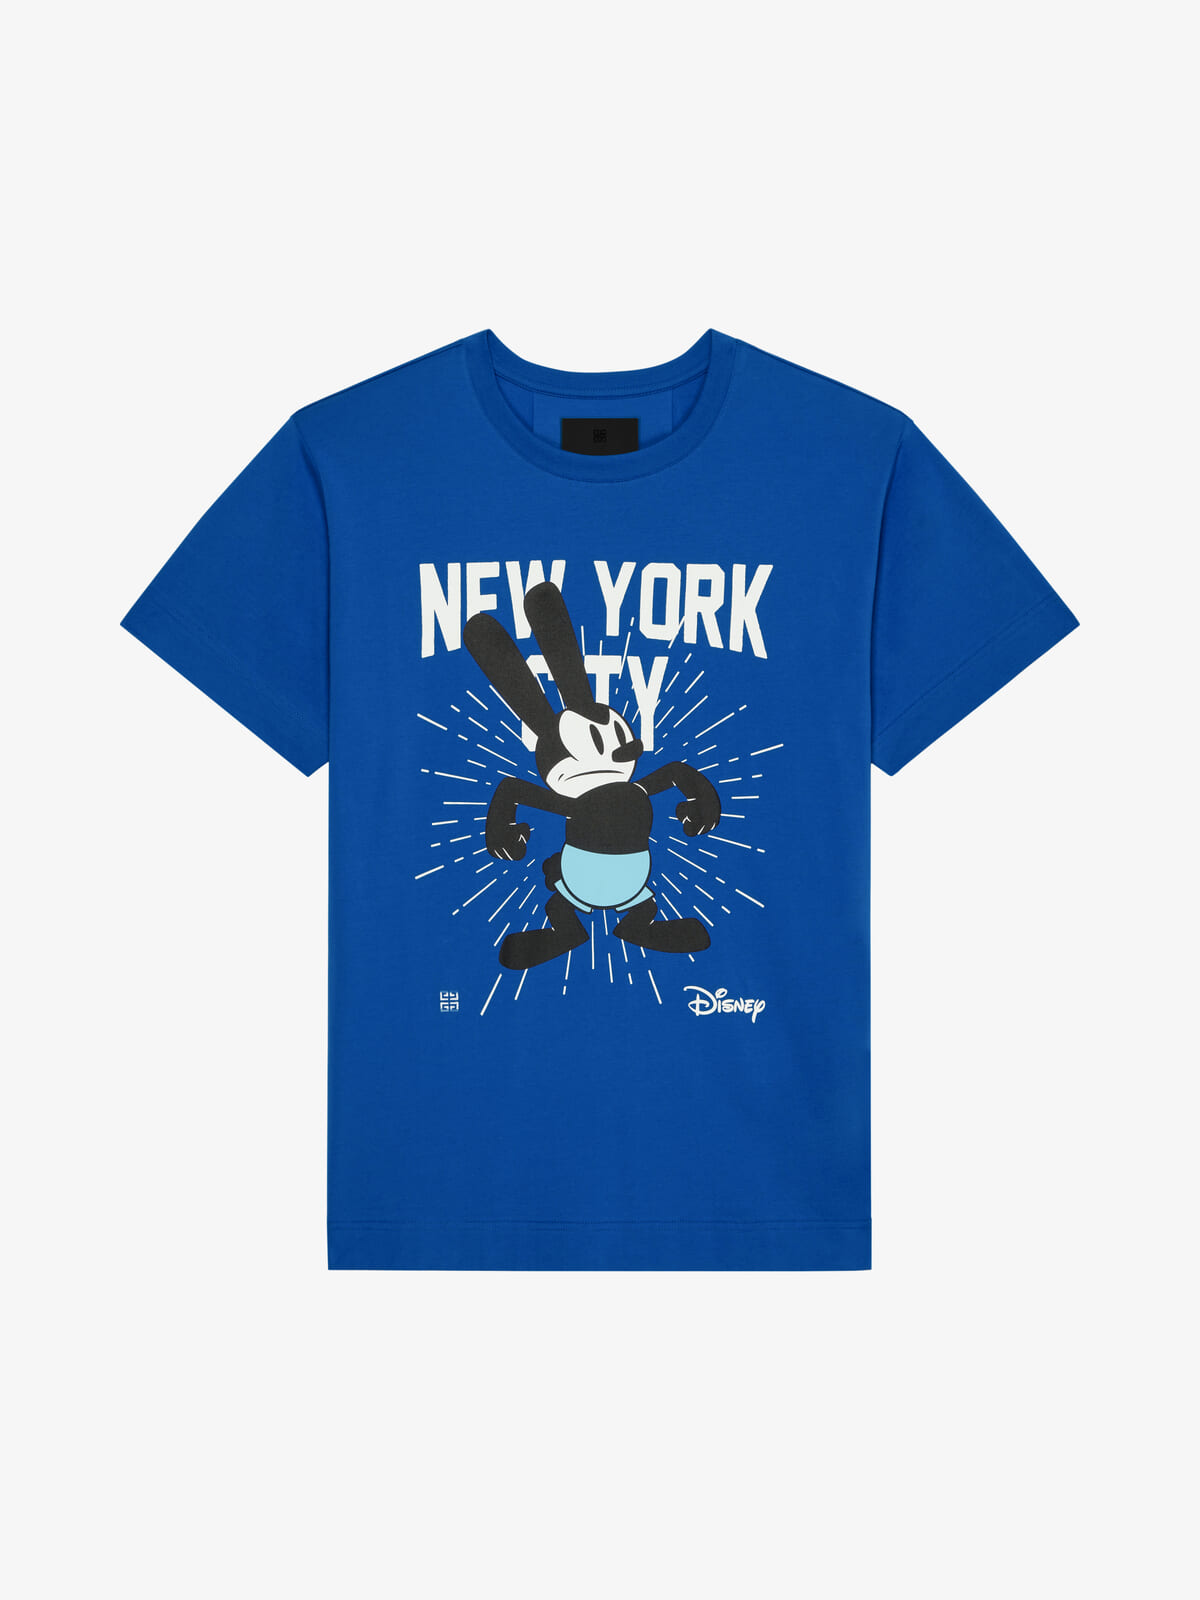 NEWYORK Tシャツ